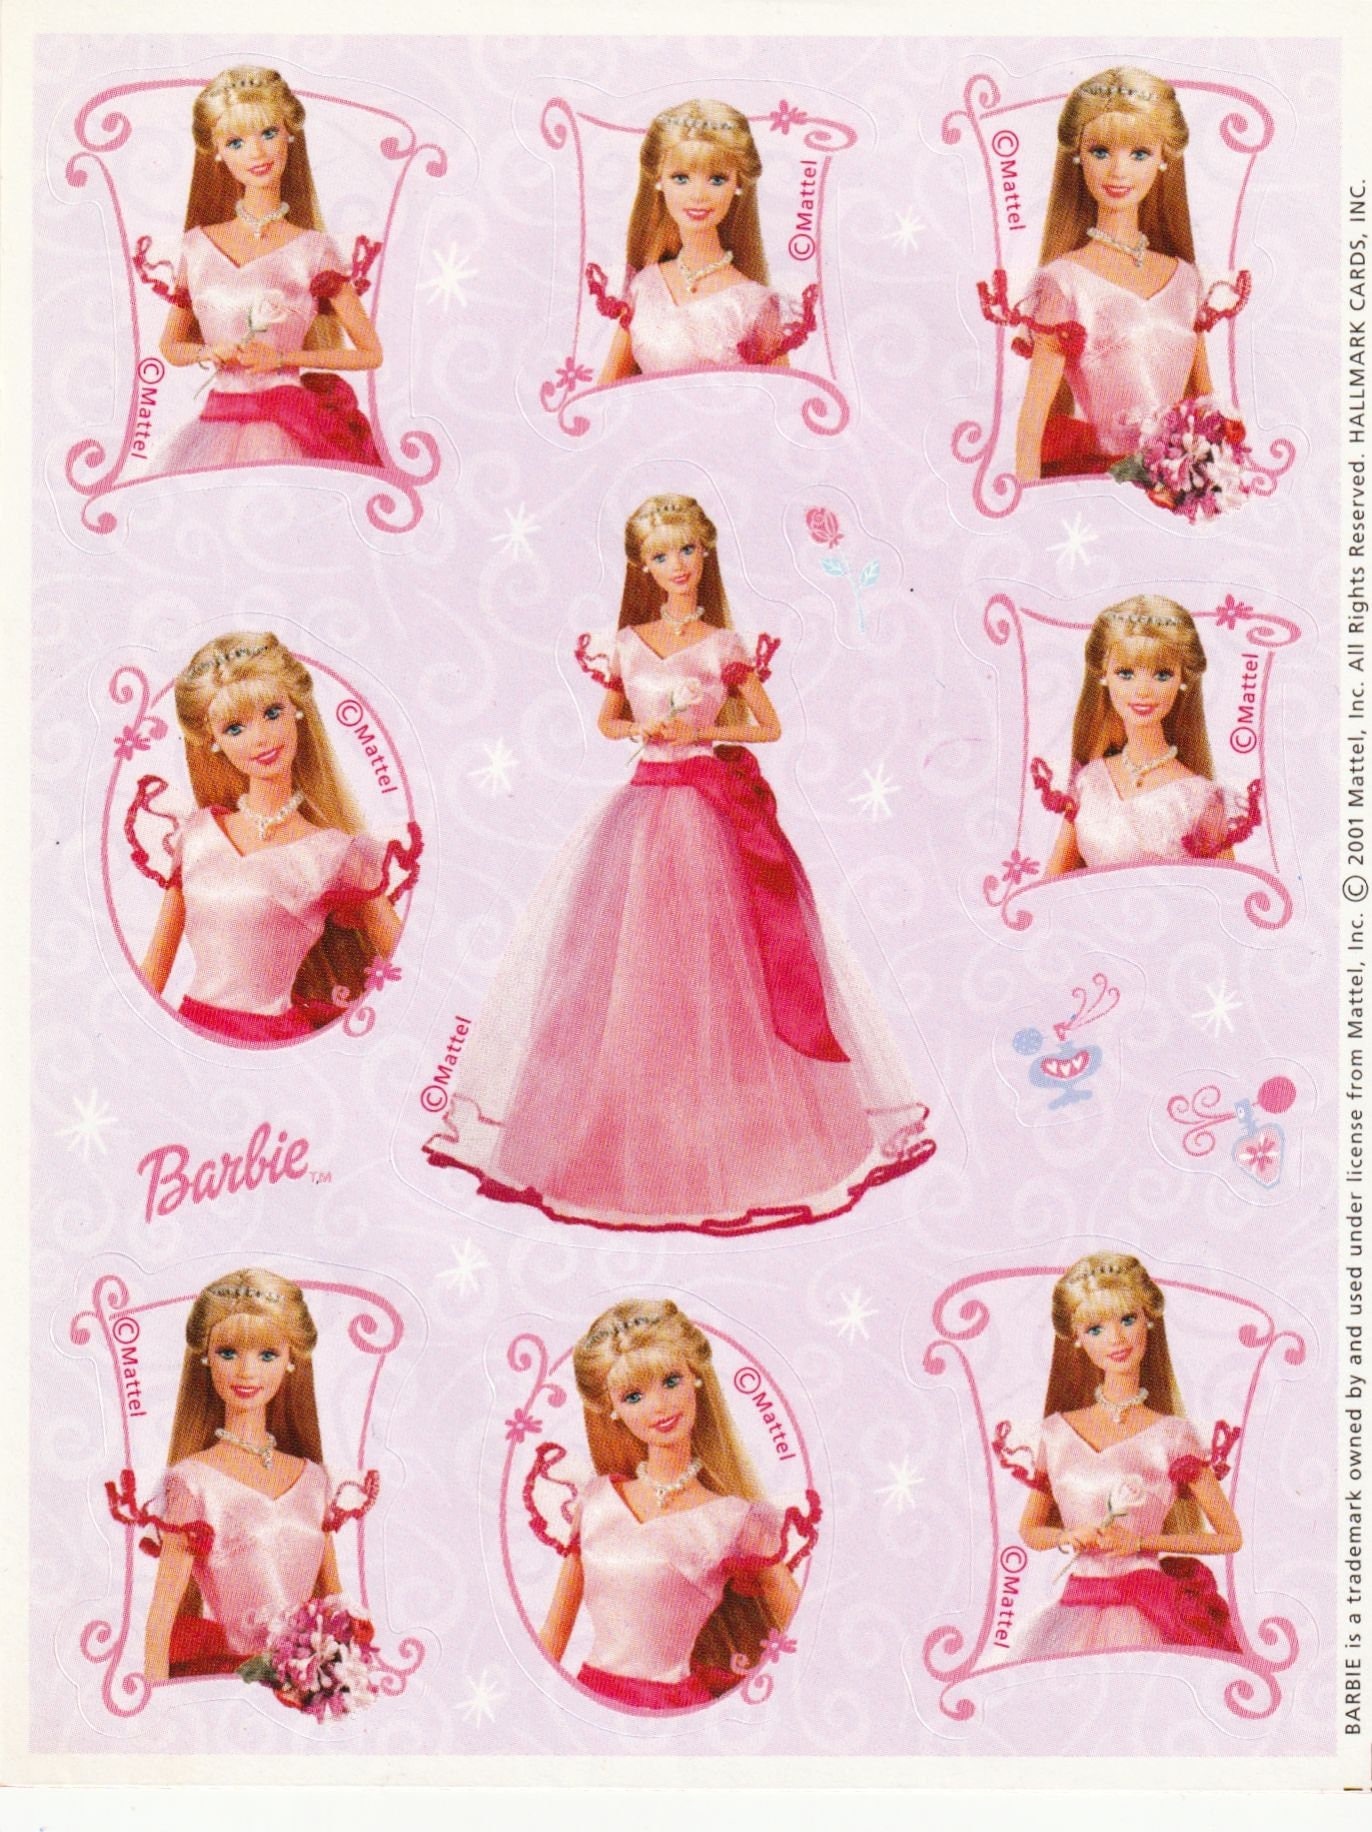 Barbie anniversaire 2001